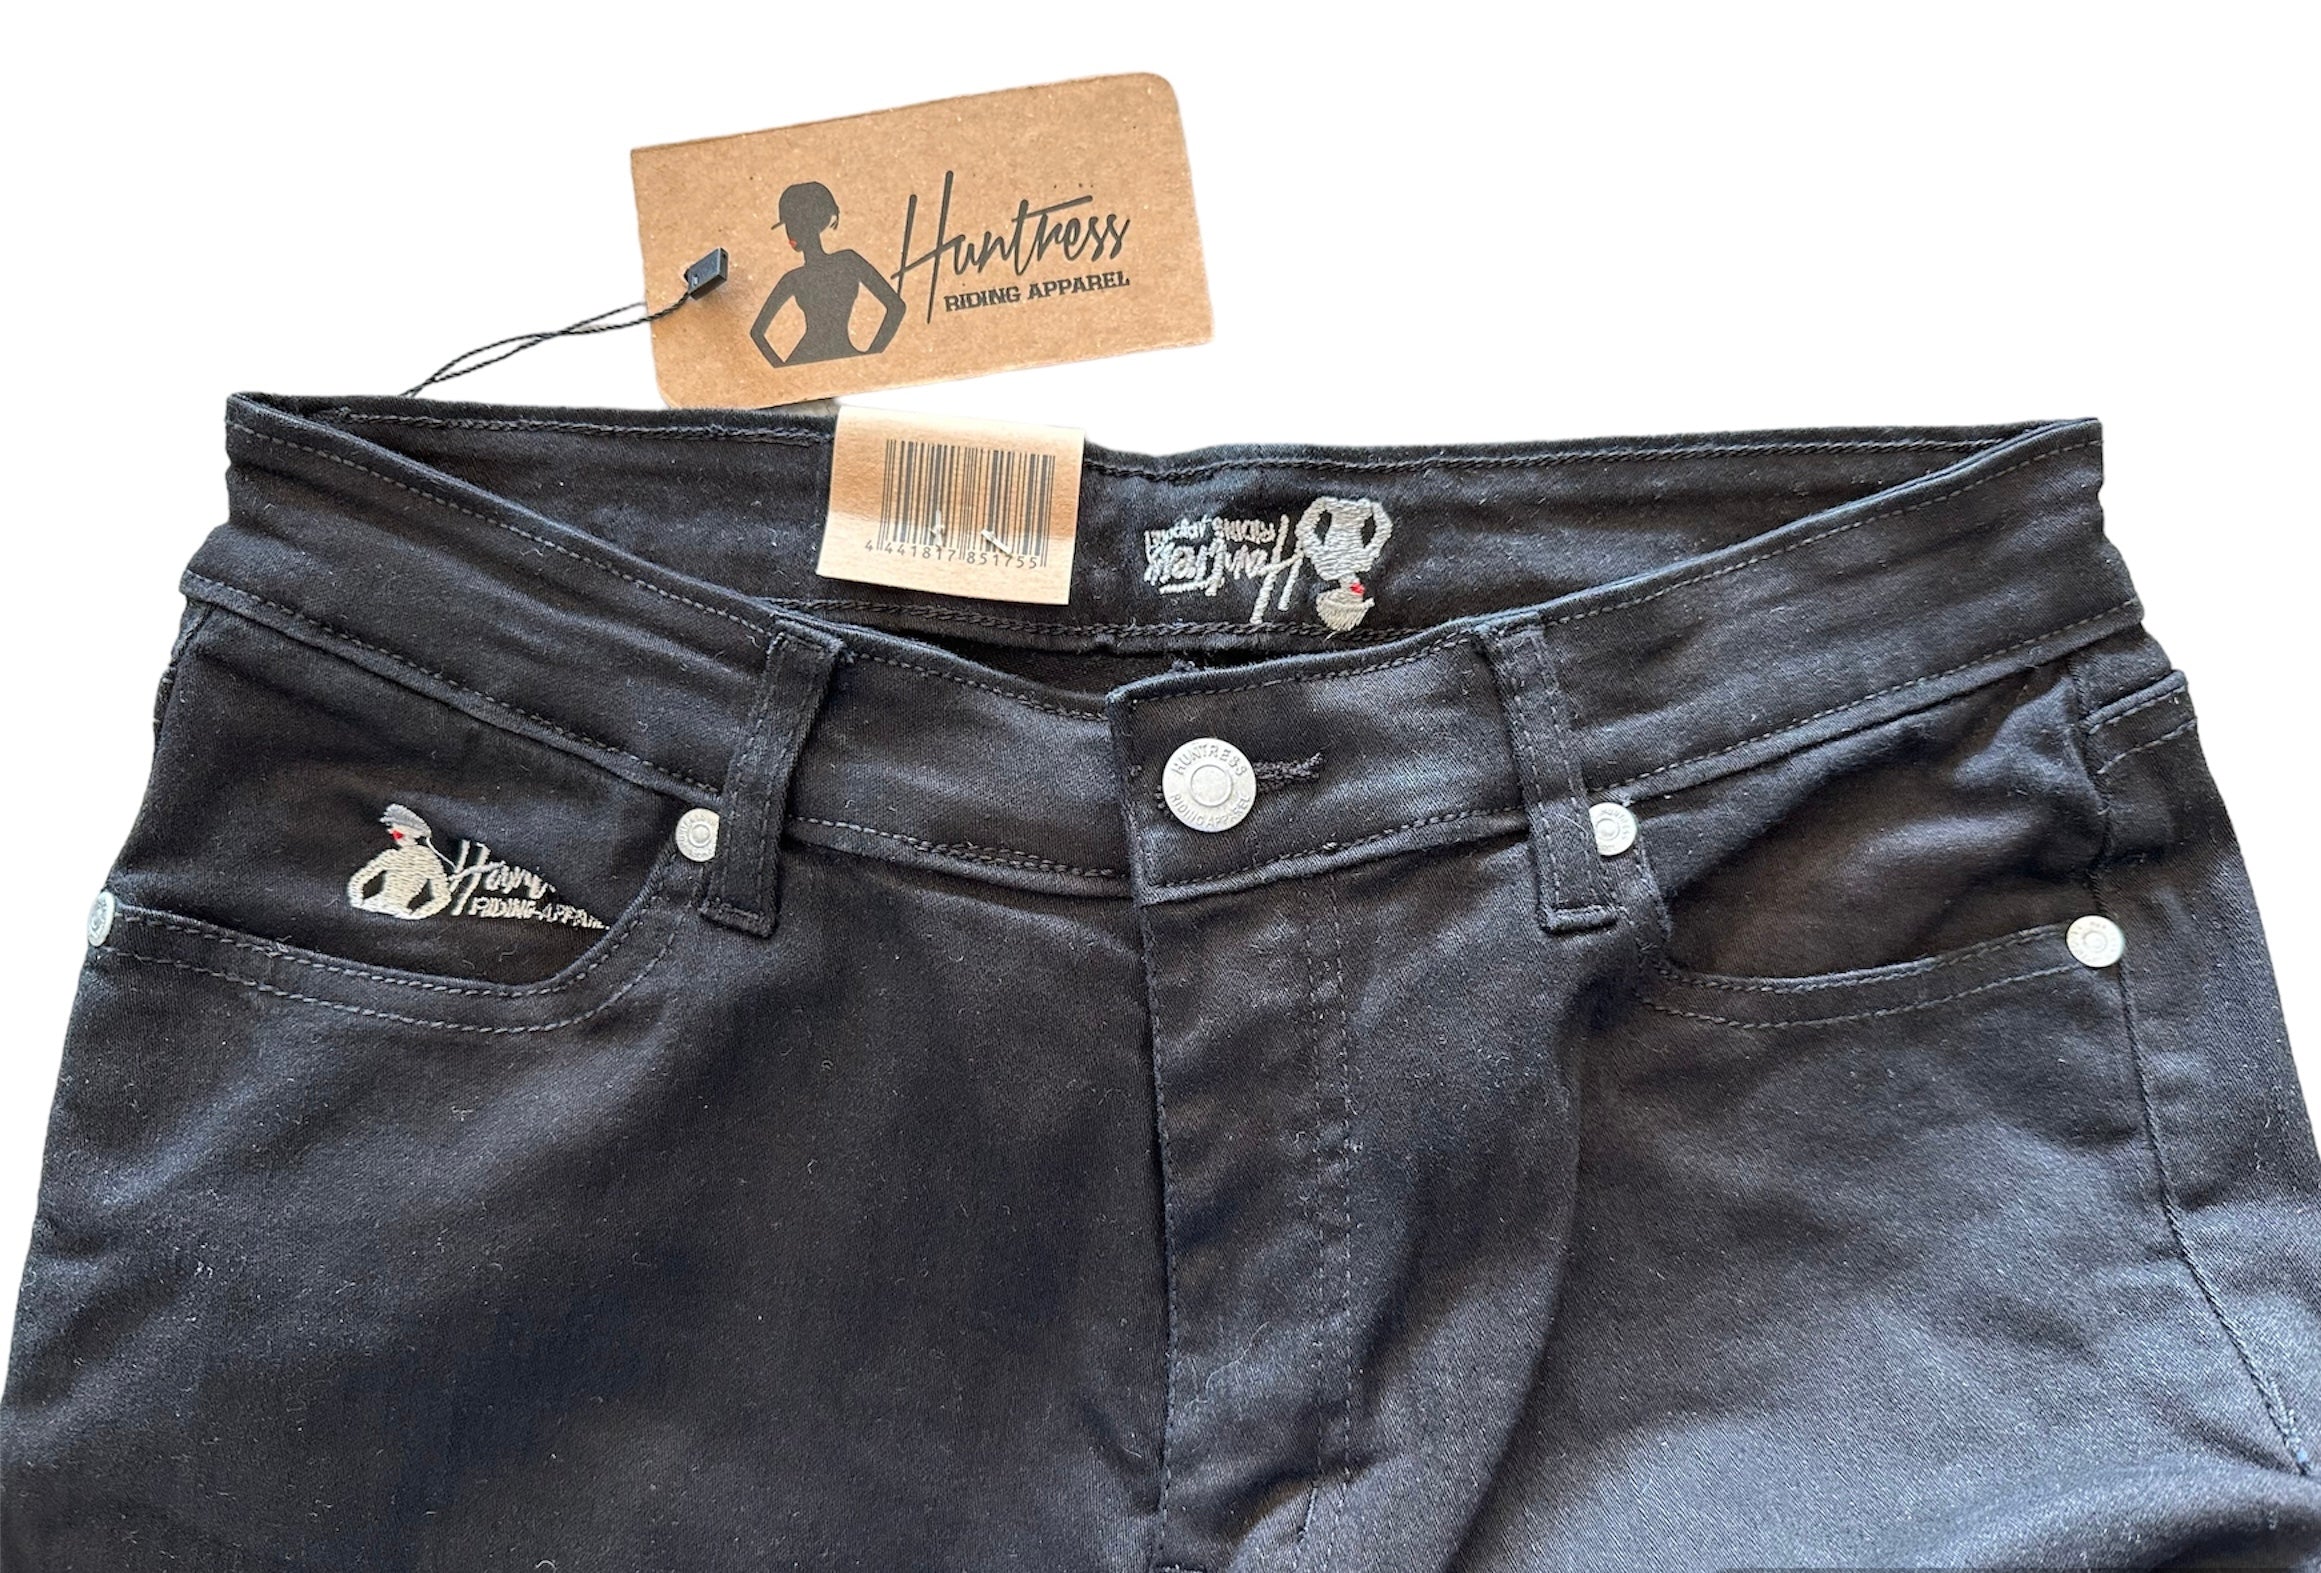 Huntress Jeans “Black”